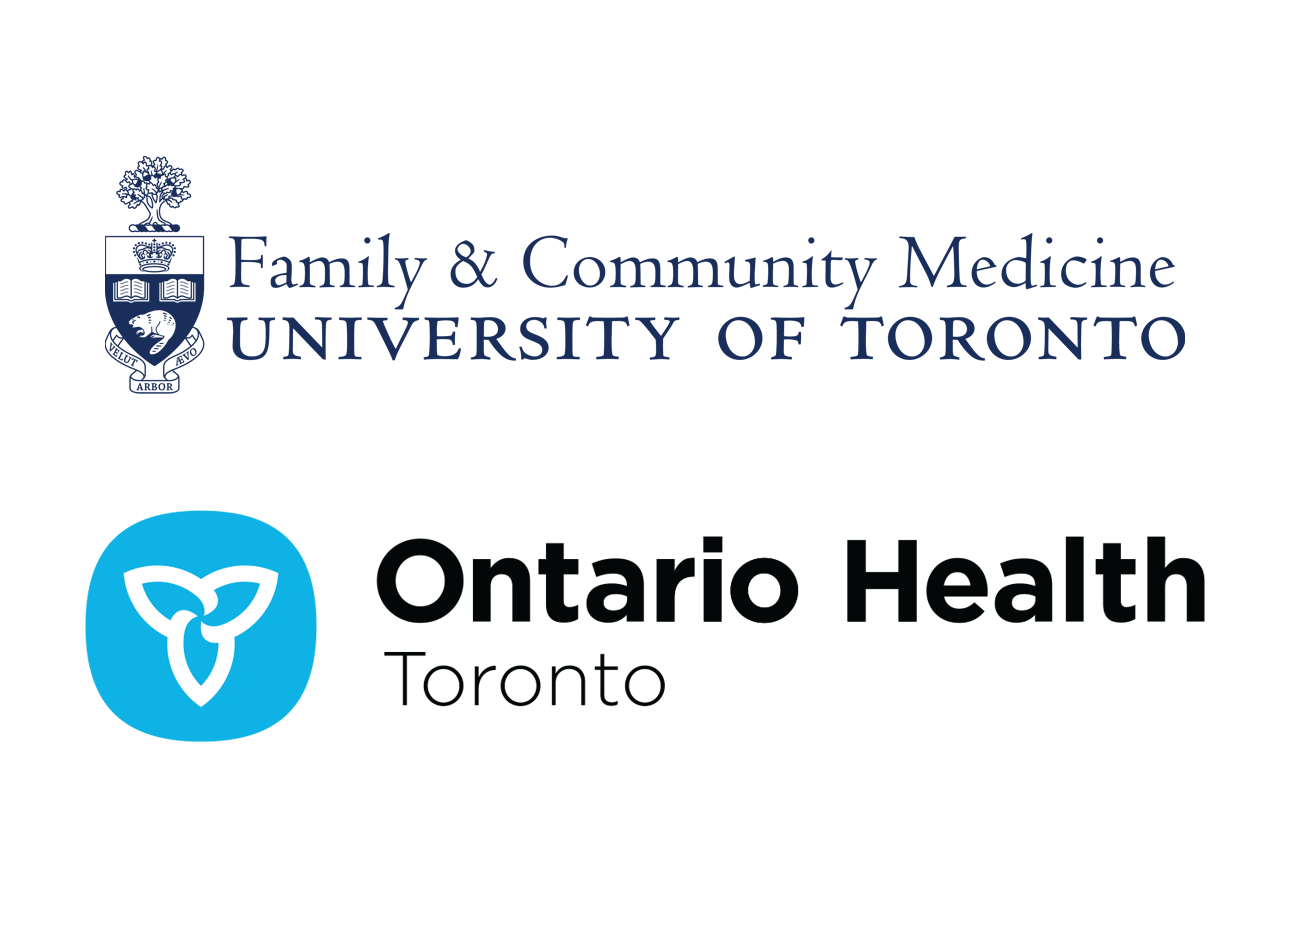 DFCM logo and Ontario Health Toronto logo